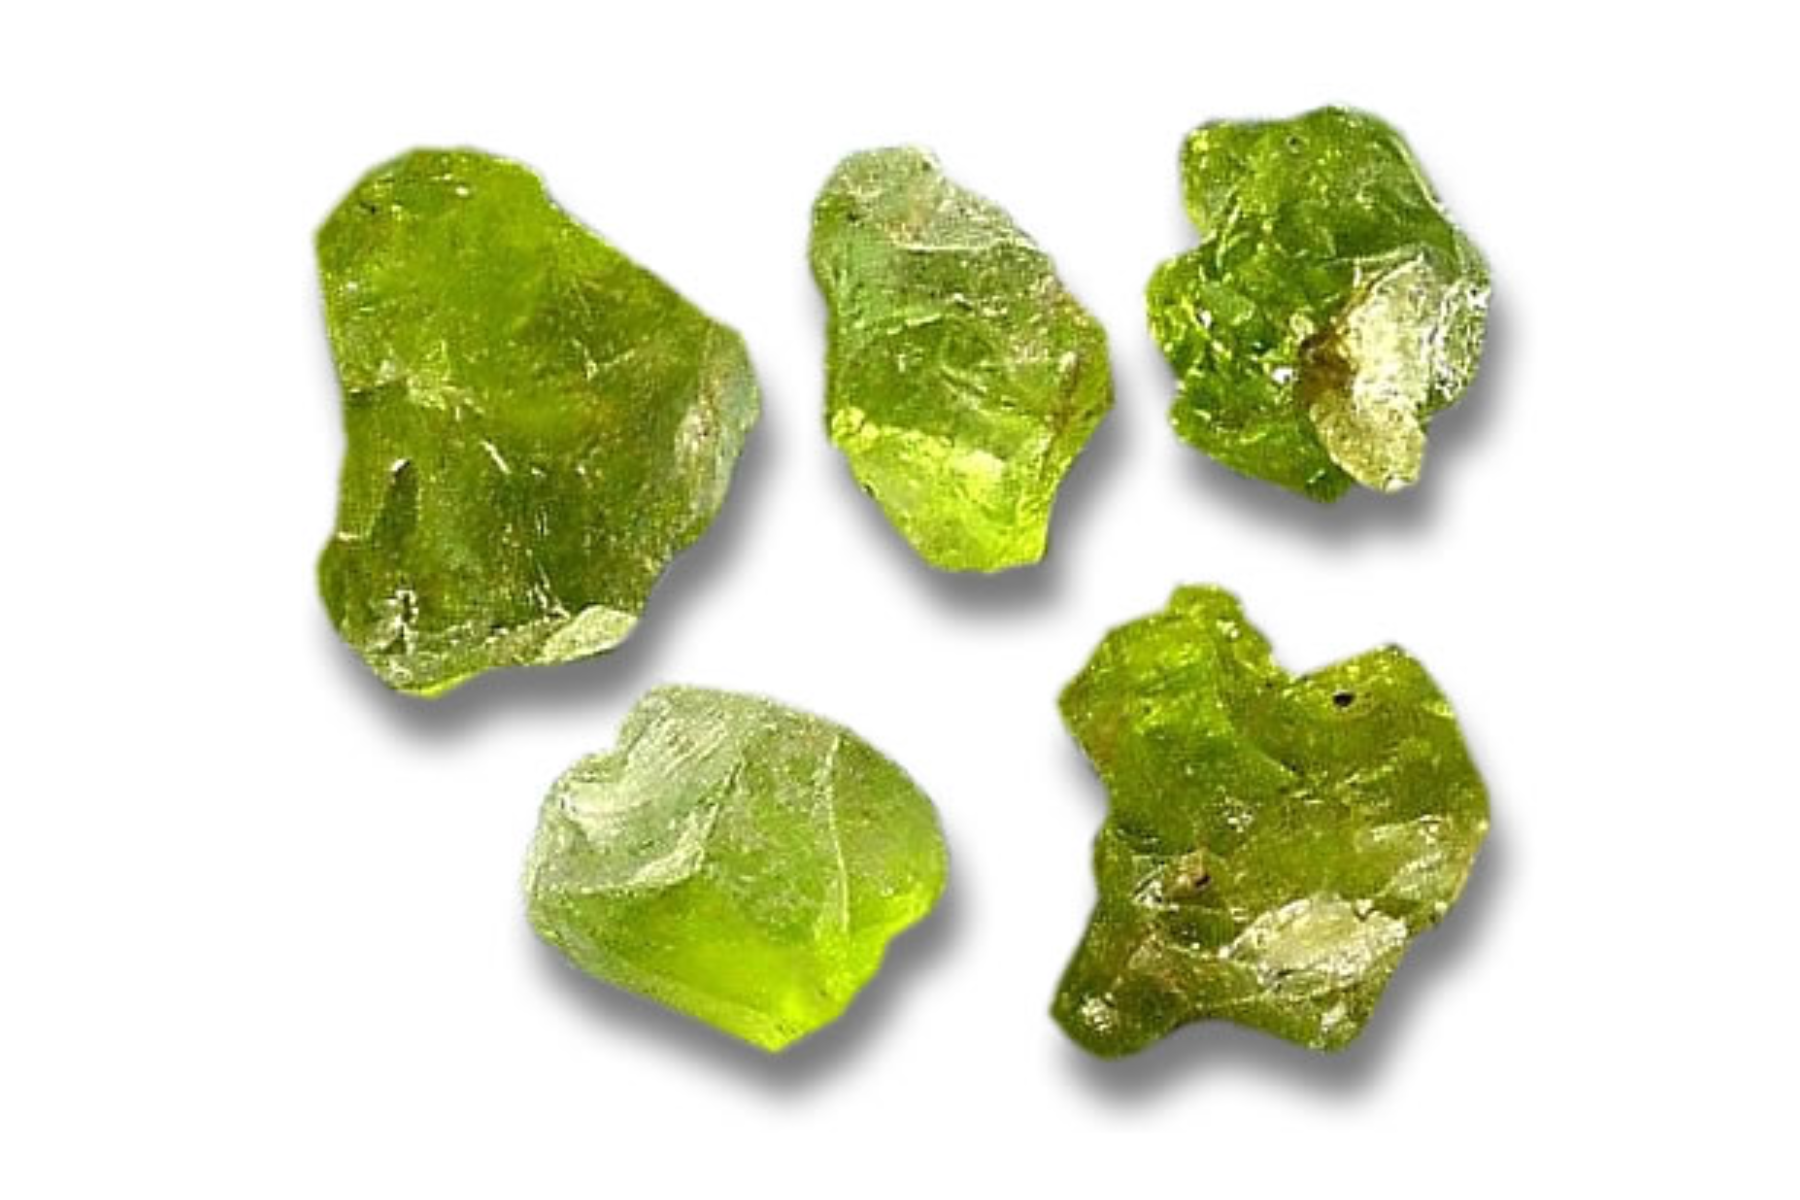 Five chrysolite stones